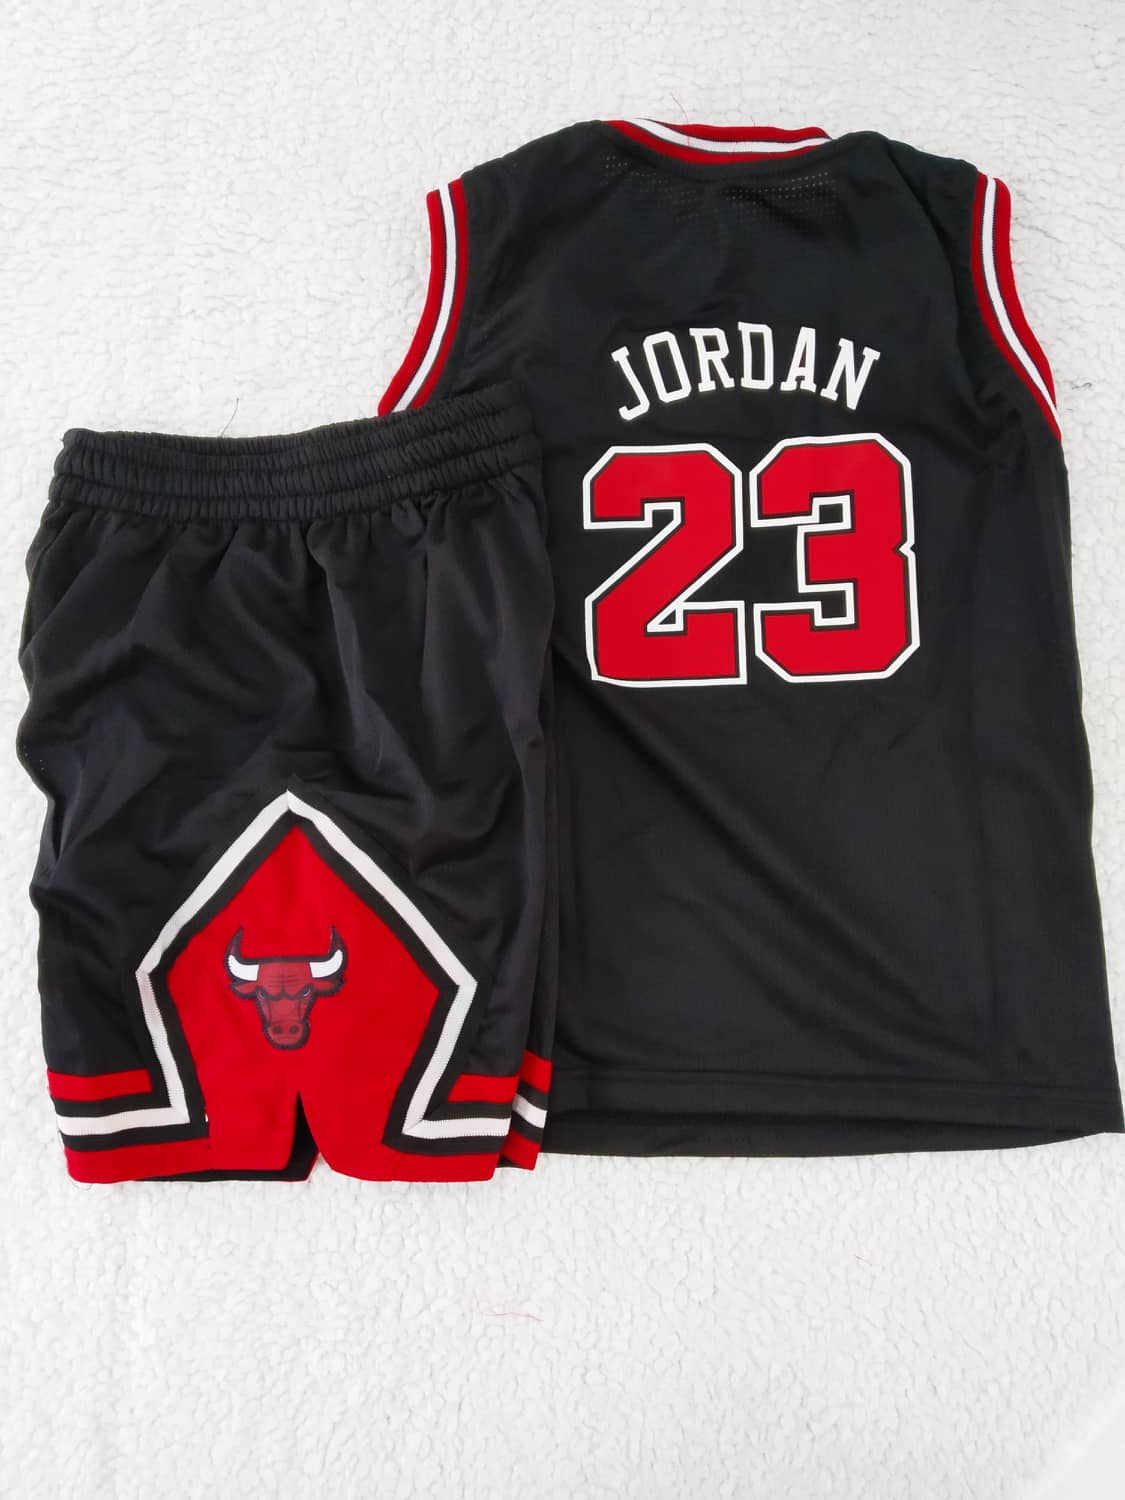 michael jordan jersey and shorts